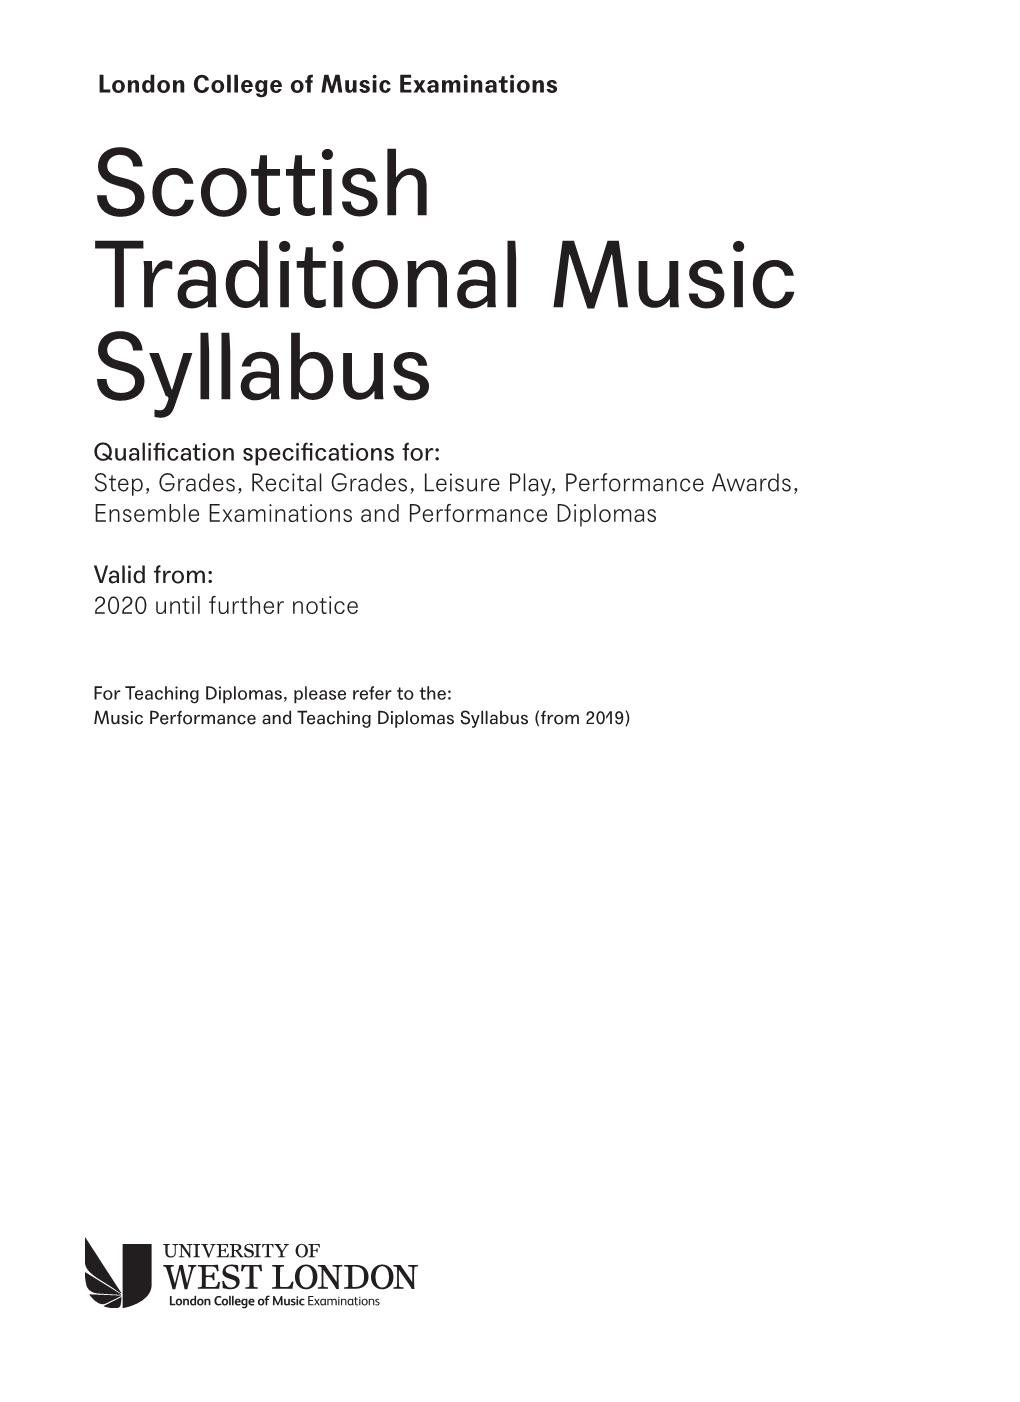 Scottish Traditional Music Syllabus